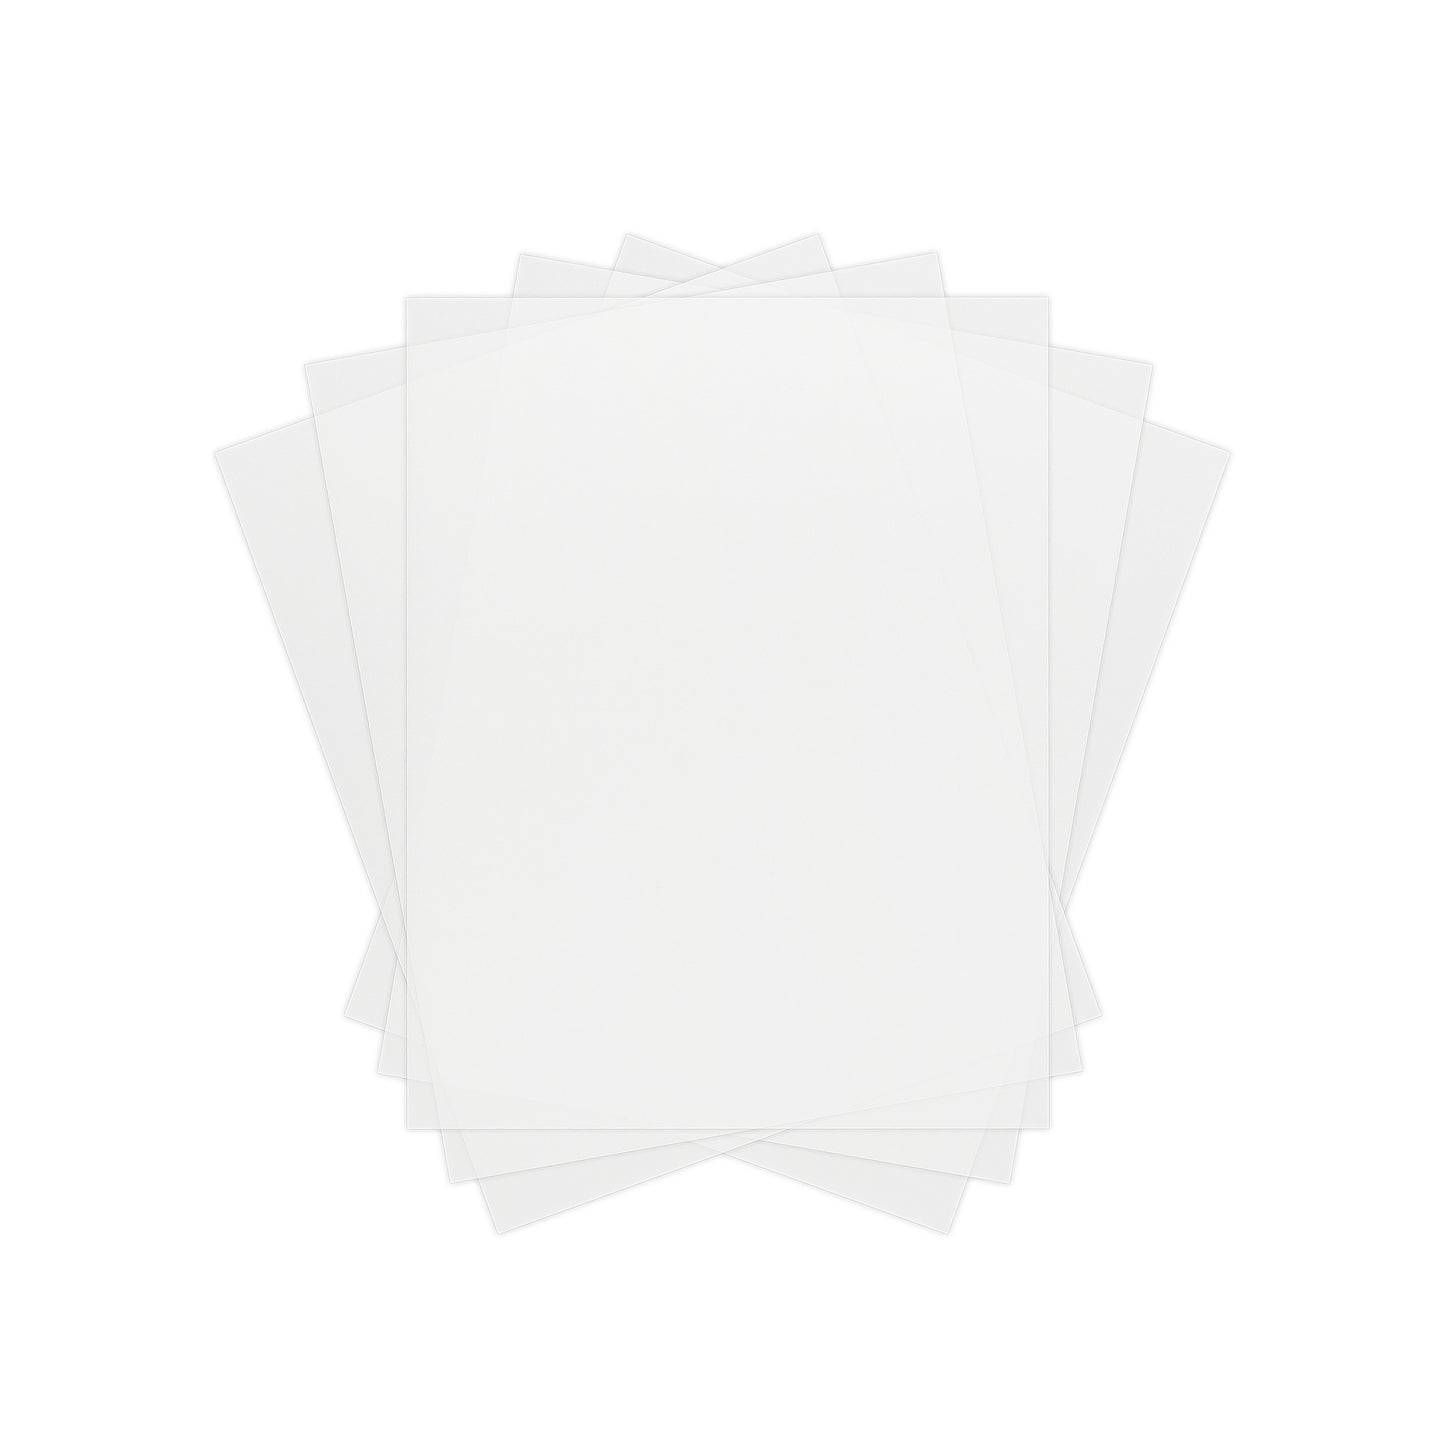 Vellum Tracing Paper 100 Sheet Pack